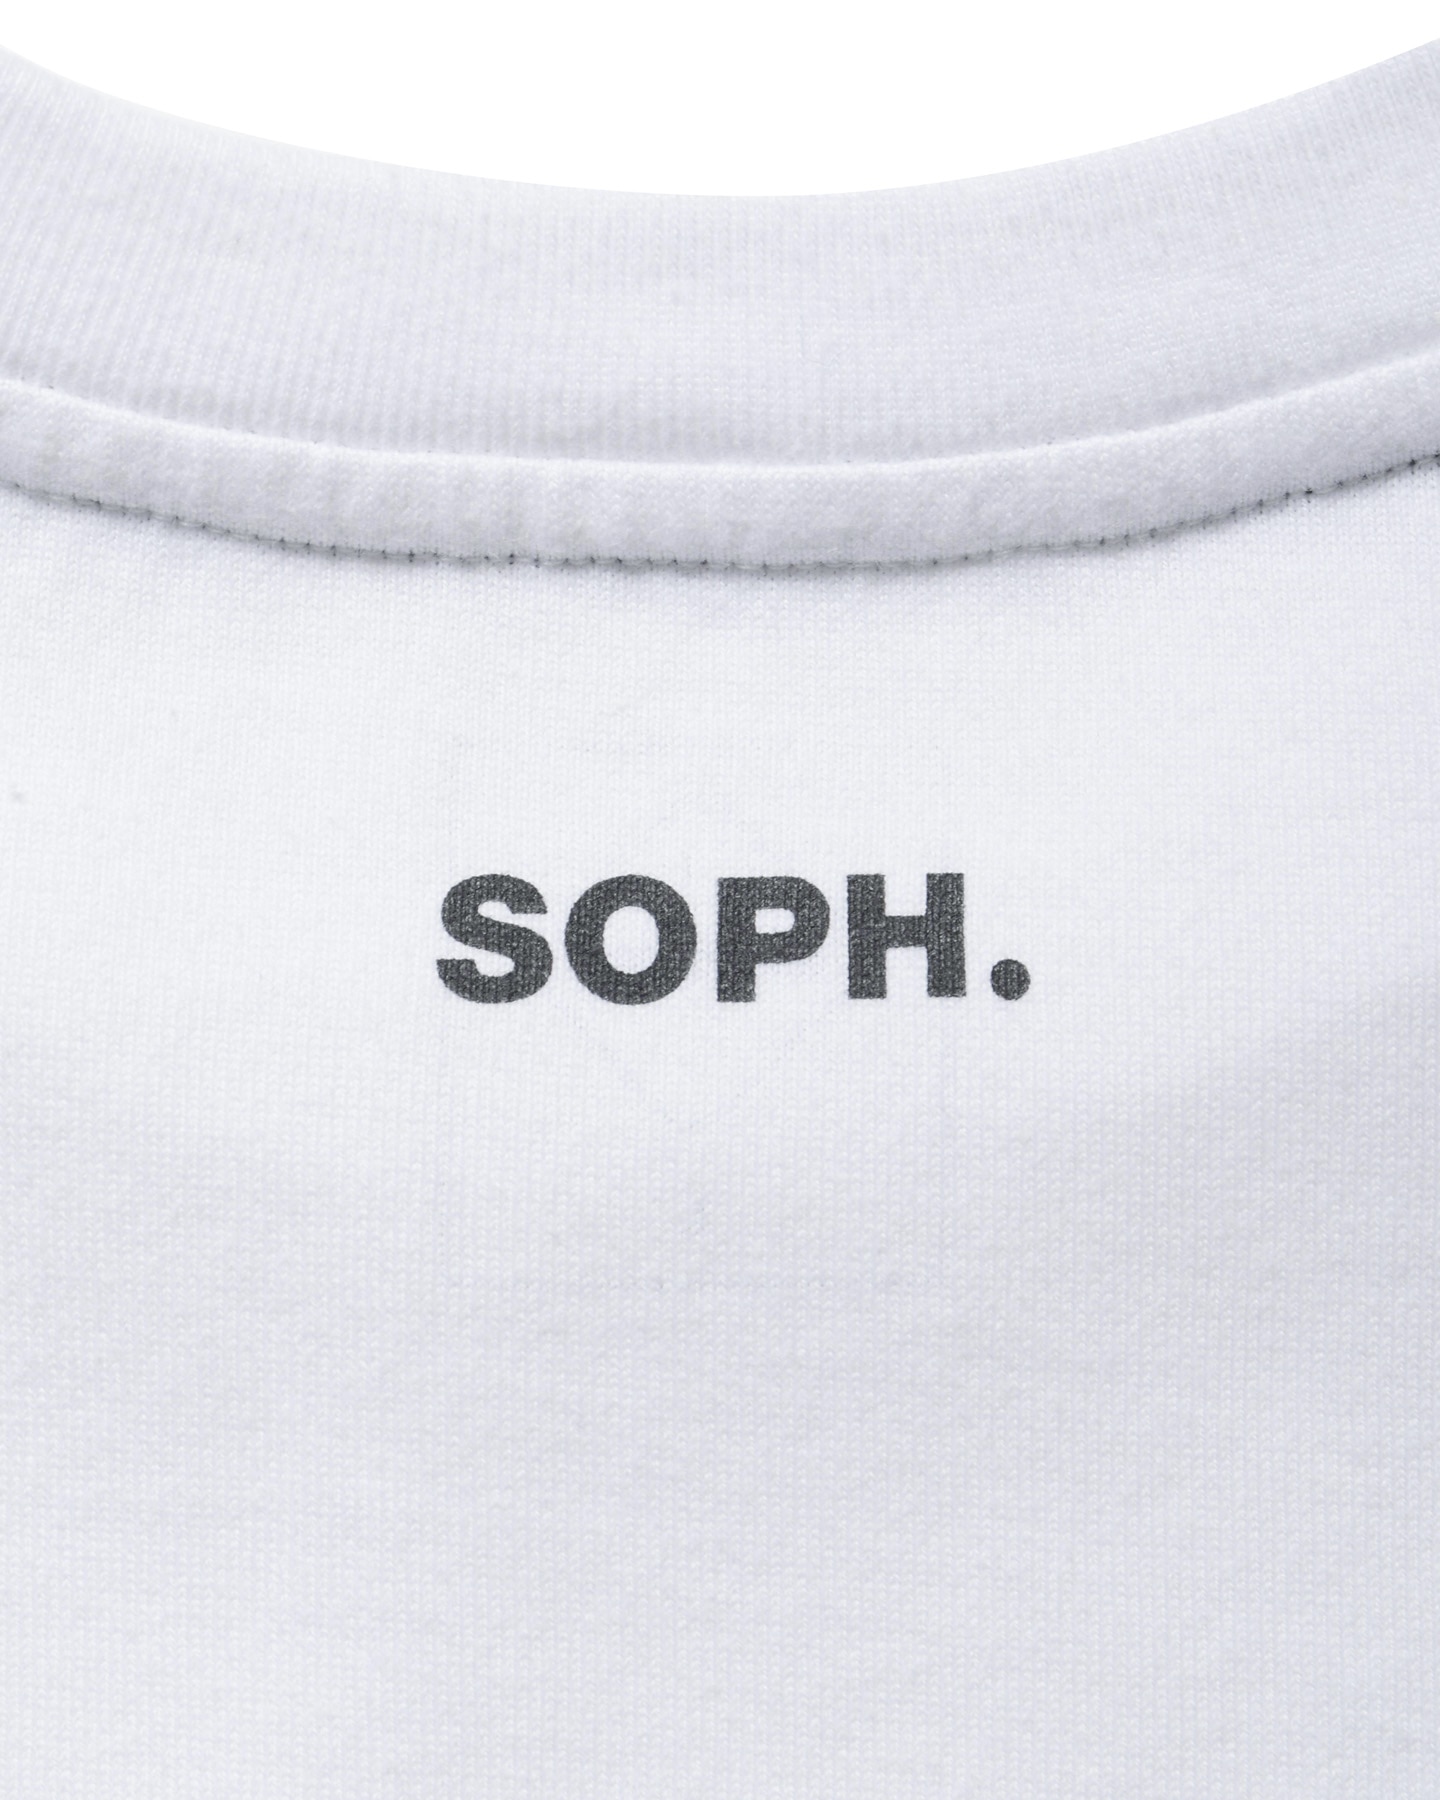 SOPH. | AUTHENTIC L/S TEAM POCKET TEE(M WHITE):